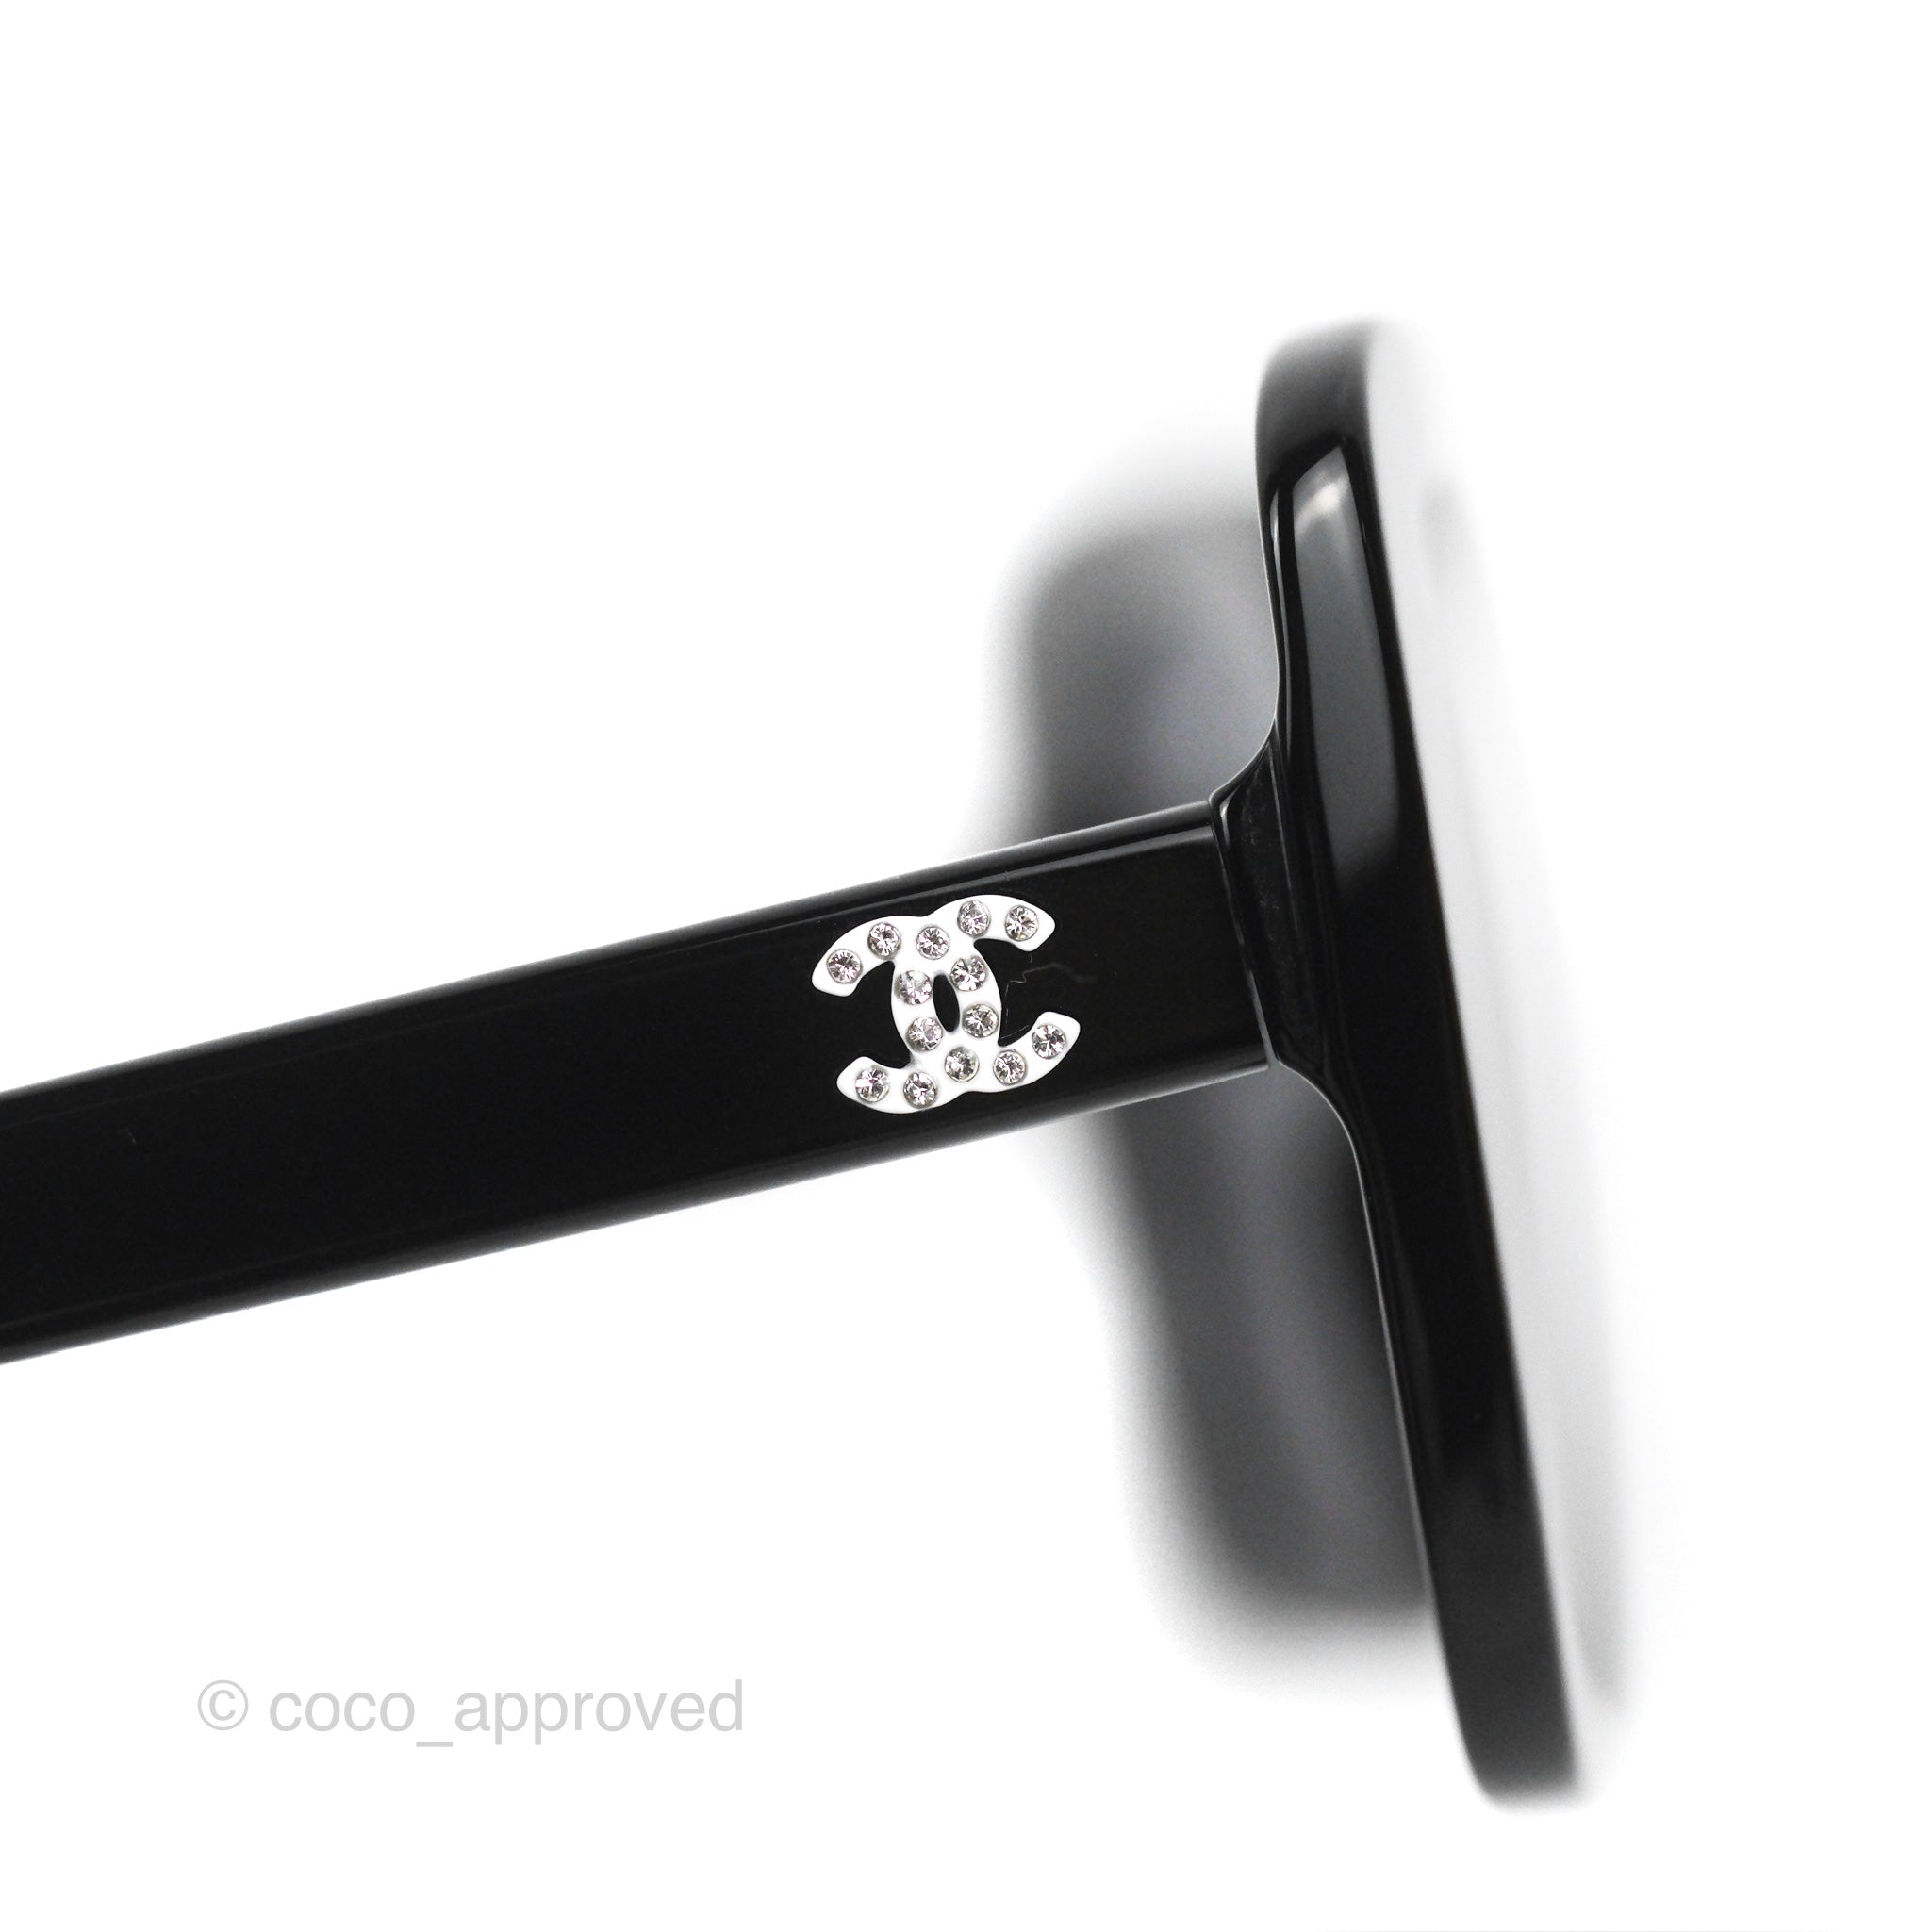 Chanel Acetate Strass Square Polarized Sunglasses Black/White